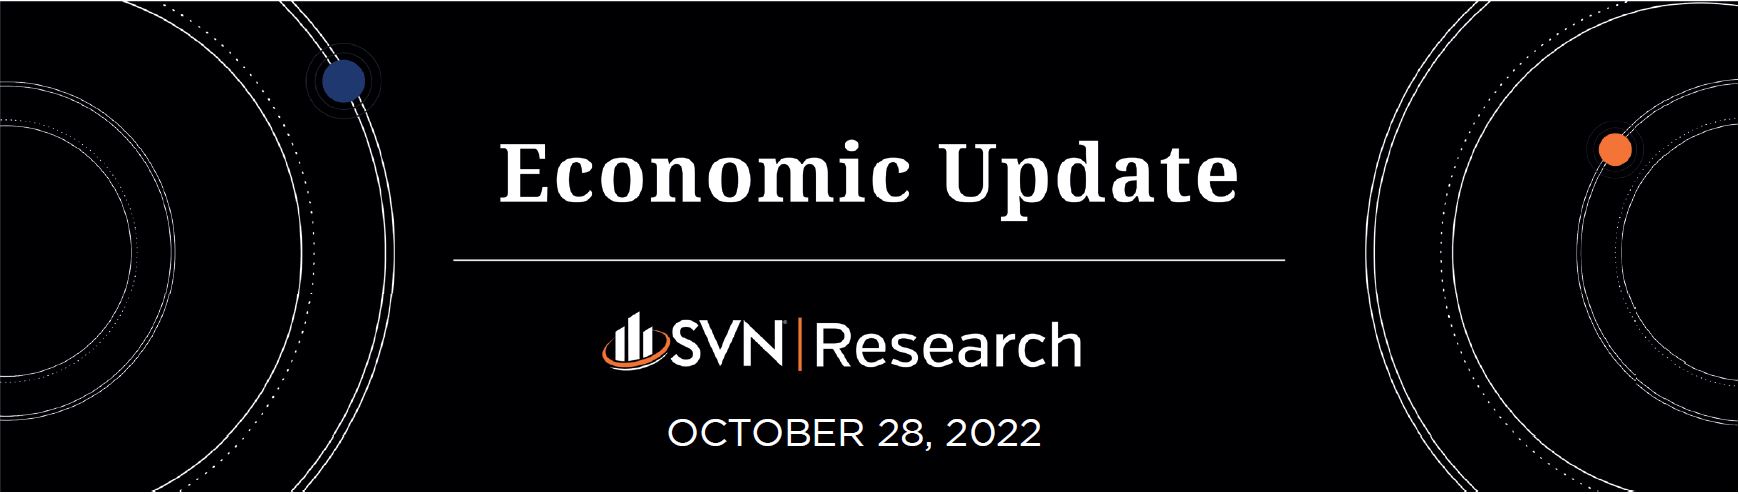 SVN | Research Economic Update 10.28.2022